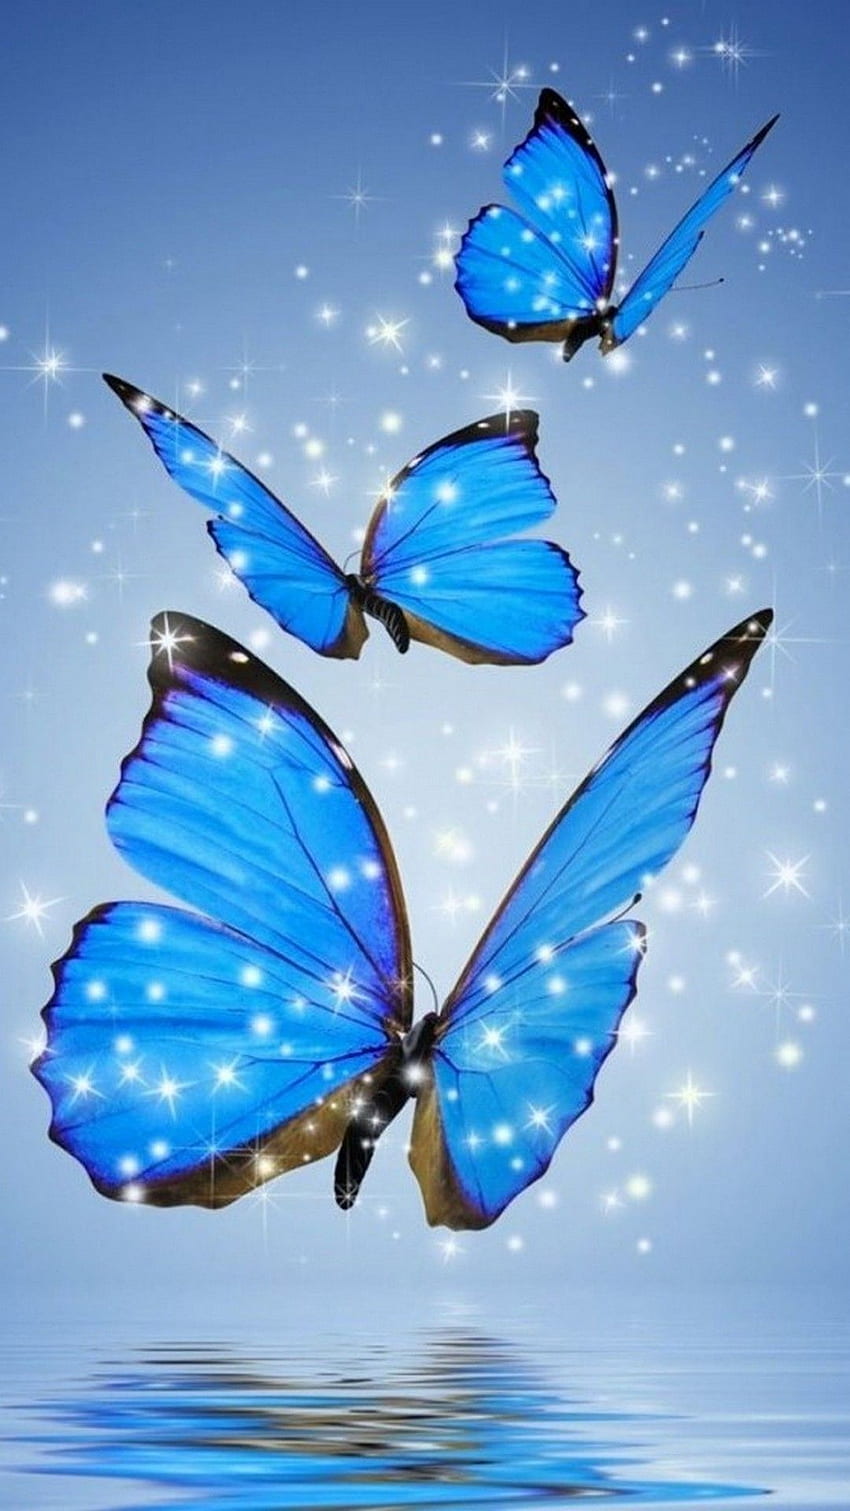 Closeup Photo of Glowing Blue Butterflies  Free Stock Photo